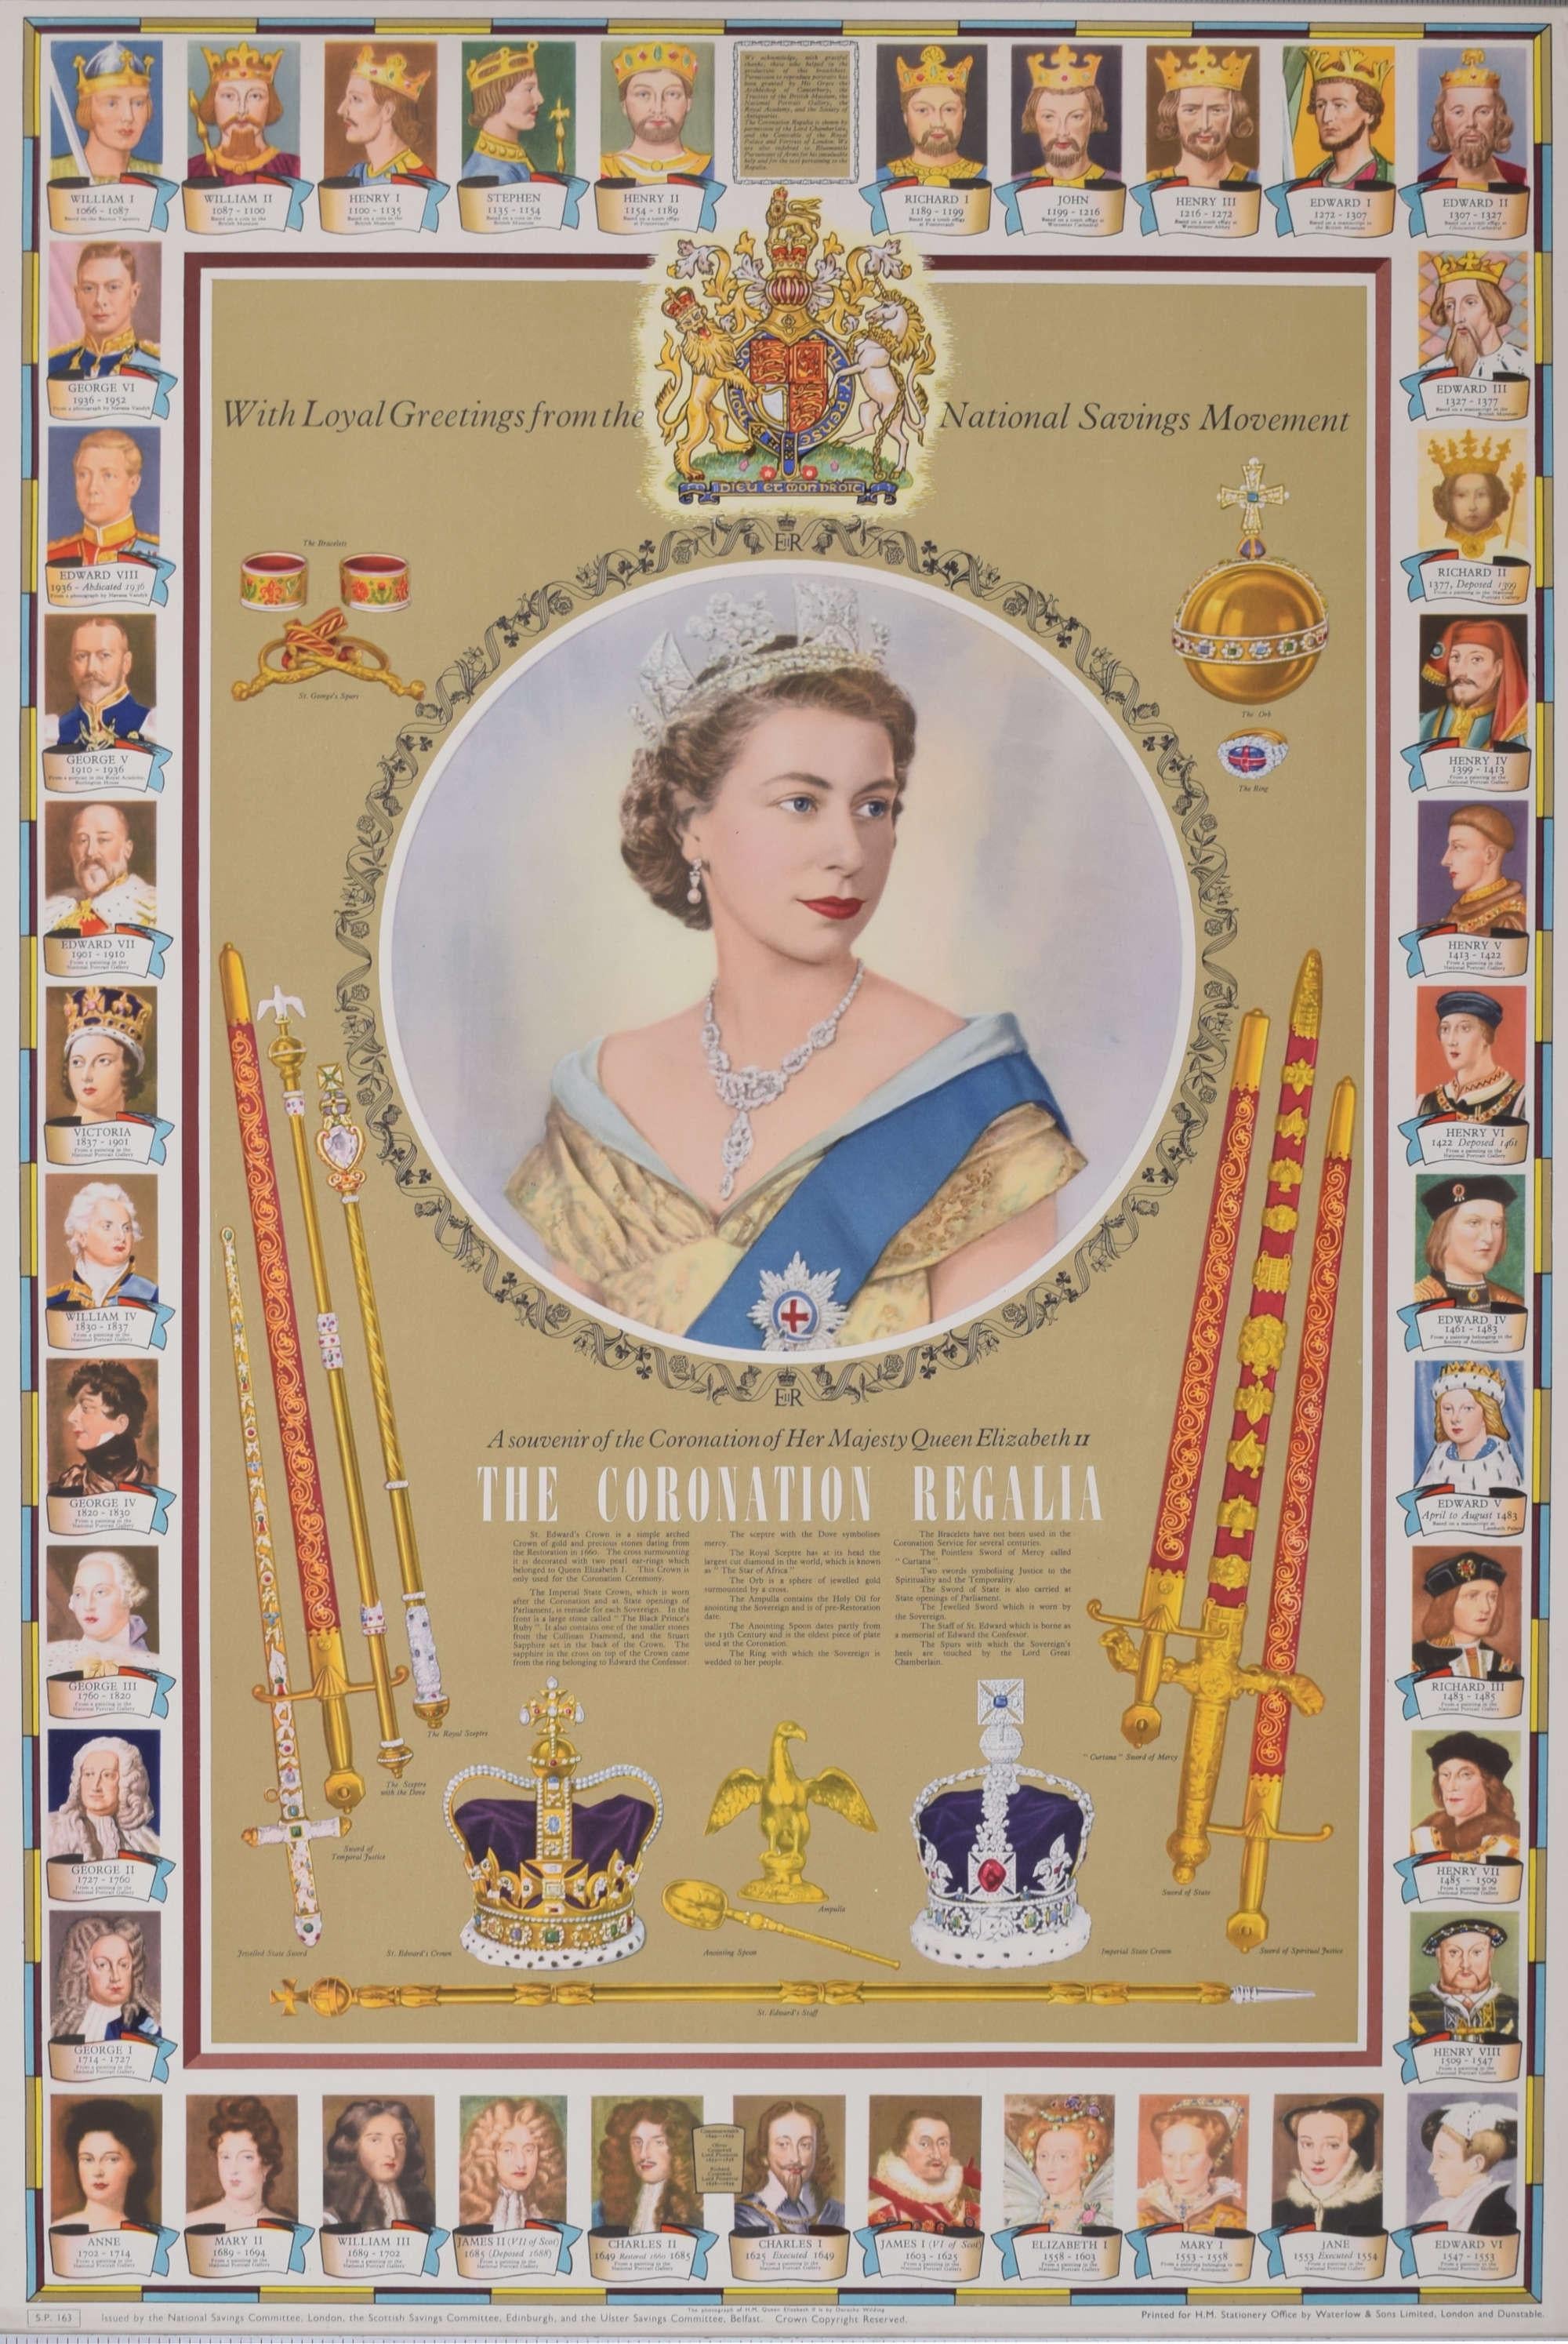 Dorothy Wilding Portrait Print – 1953 Coronation Regalia von Königin Elisabeth II., Plakat für National Savings